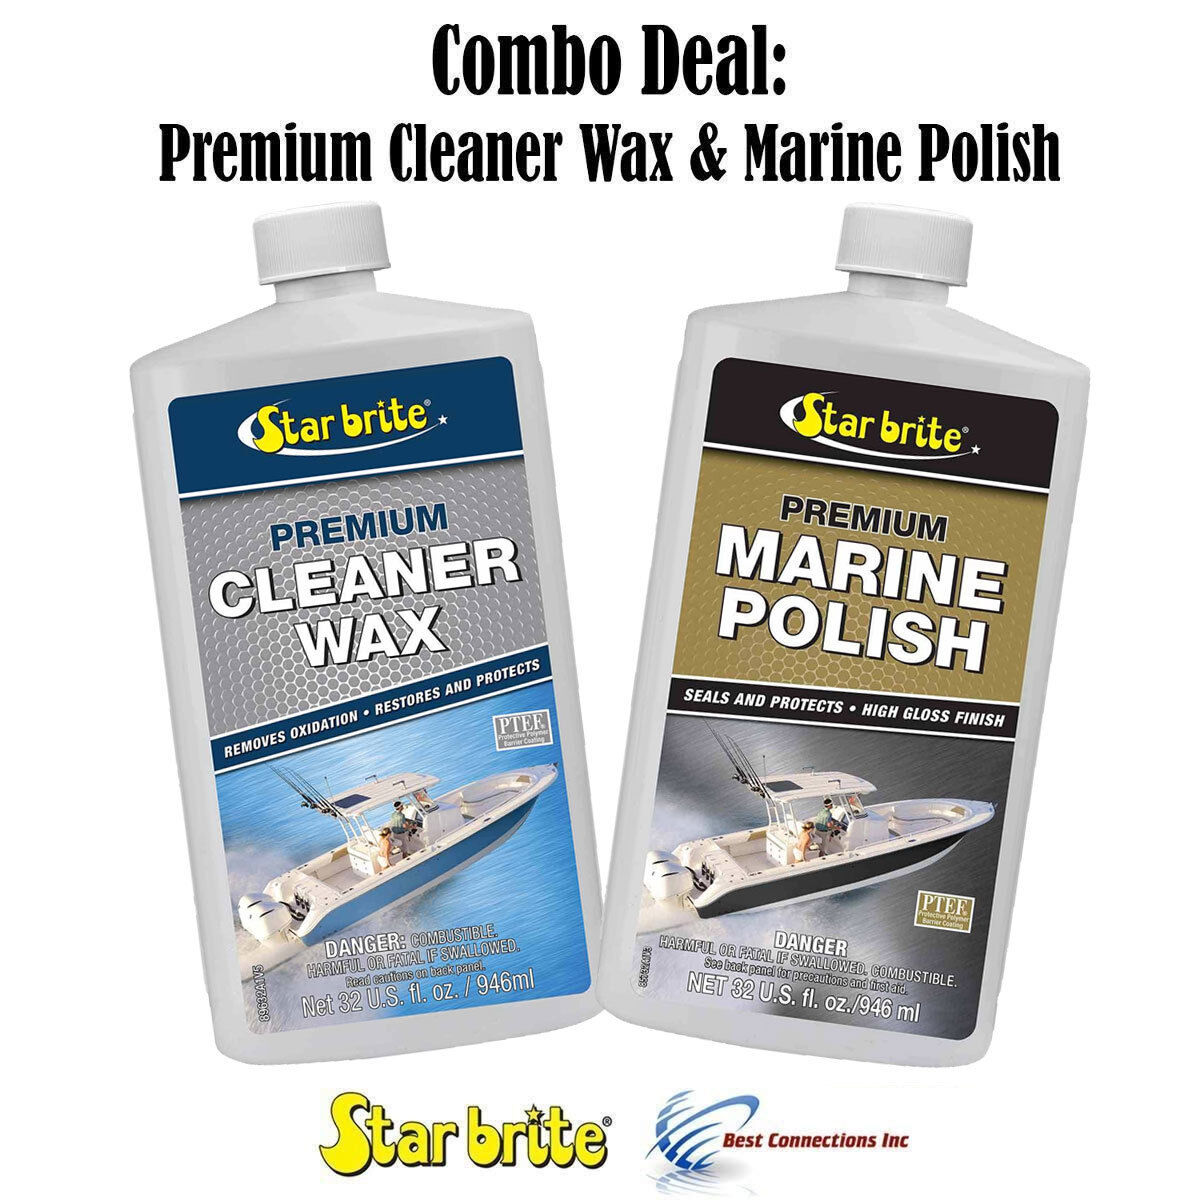 Starbrite Premium Cleaner Wax & Marine Polish Good for Pontoon S